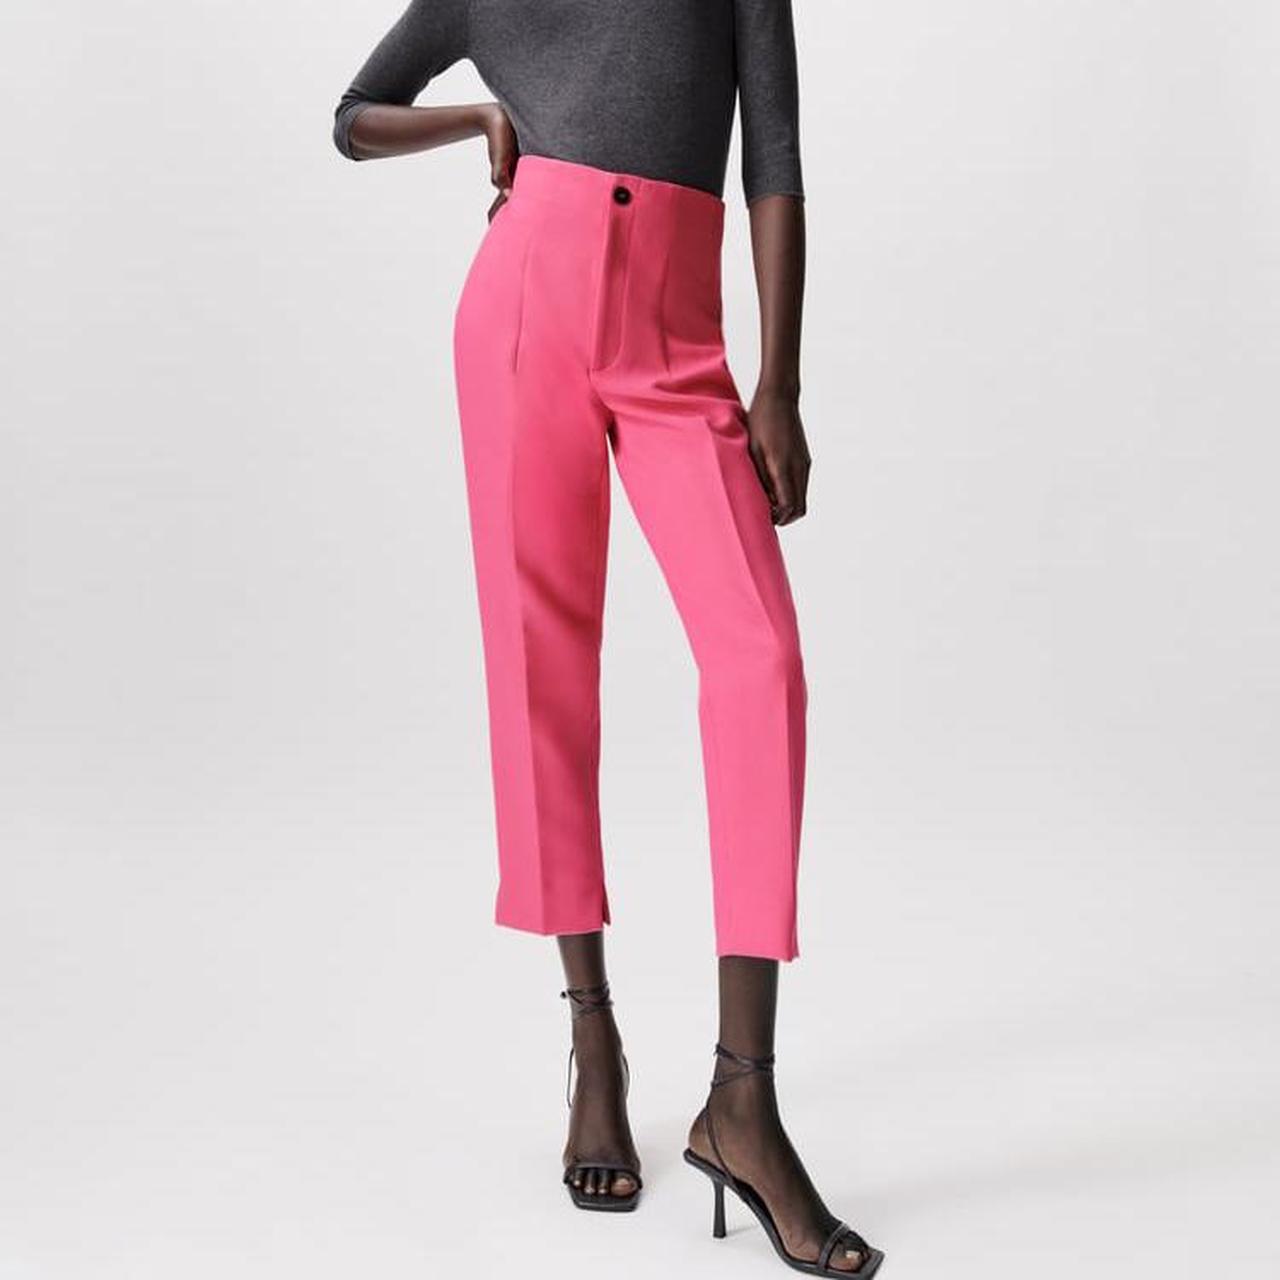 Zara High Waist Slim Fit Trousers Pink - Size XS/S - Depop